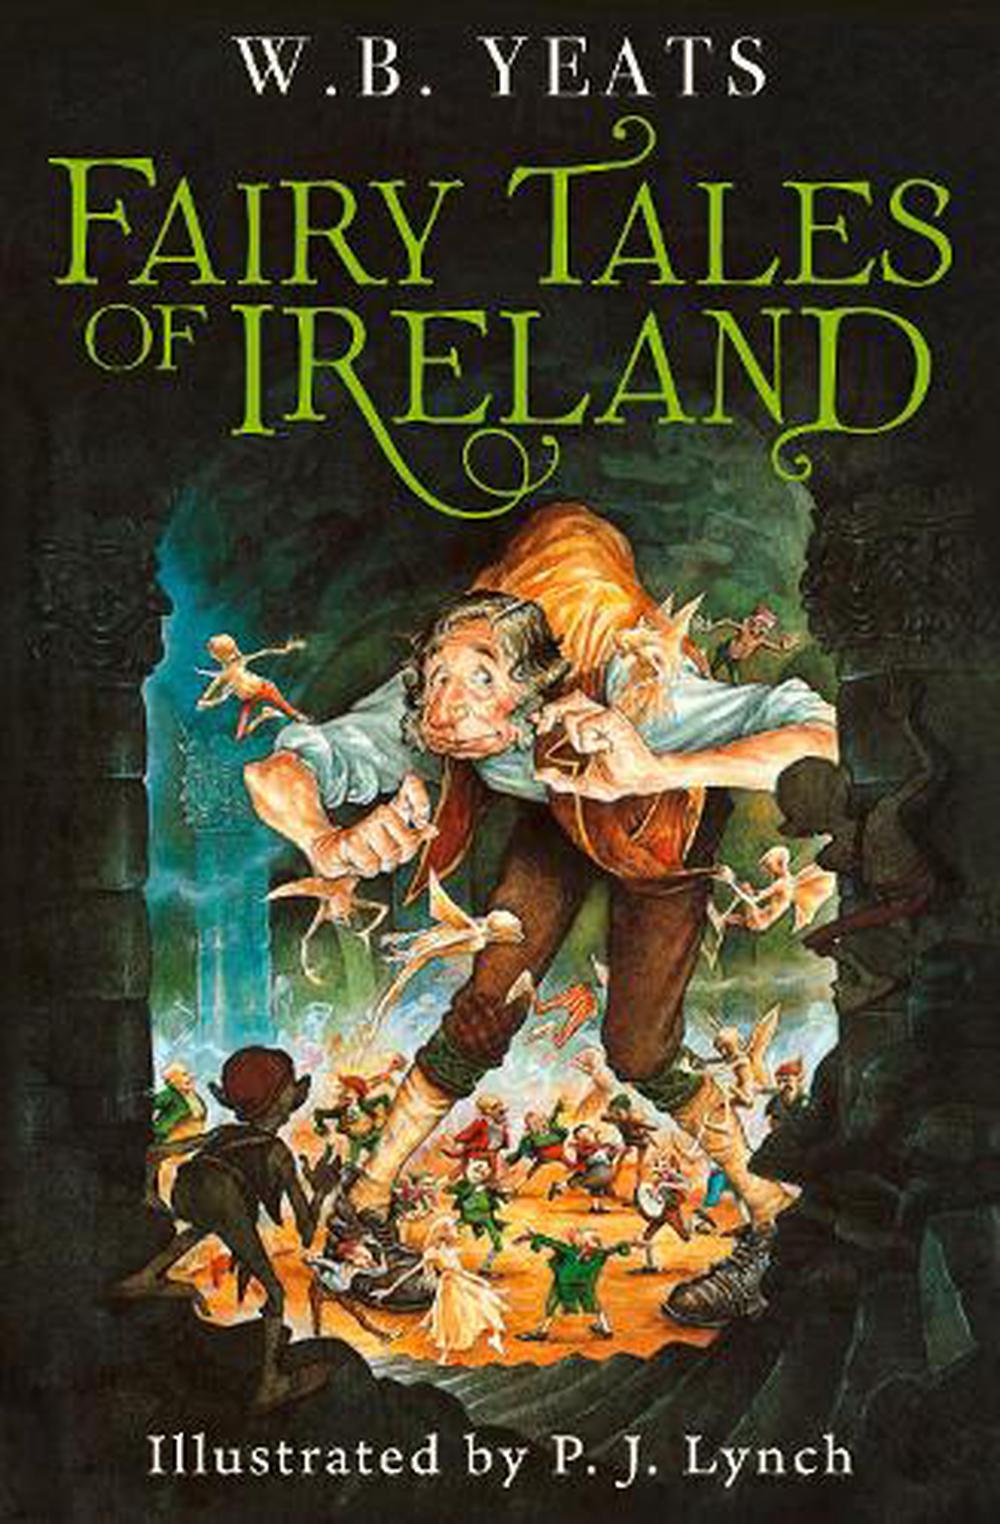 Irish Fairy and Folk Tales by Various